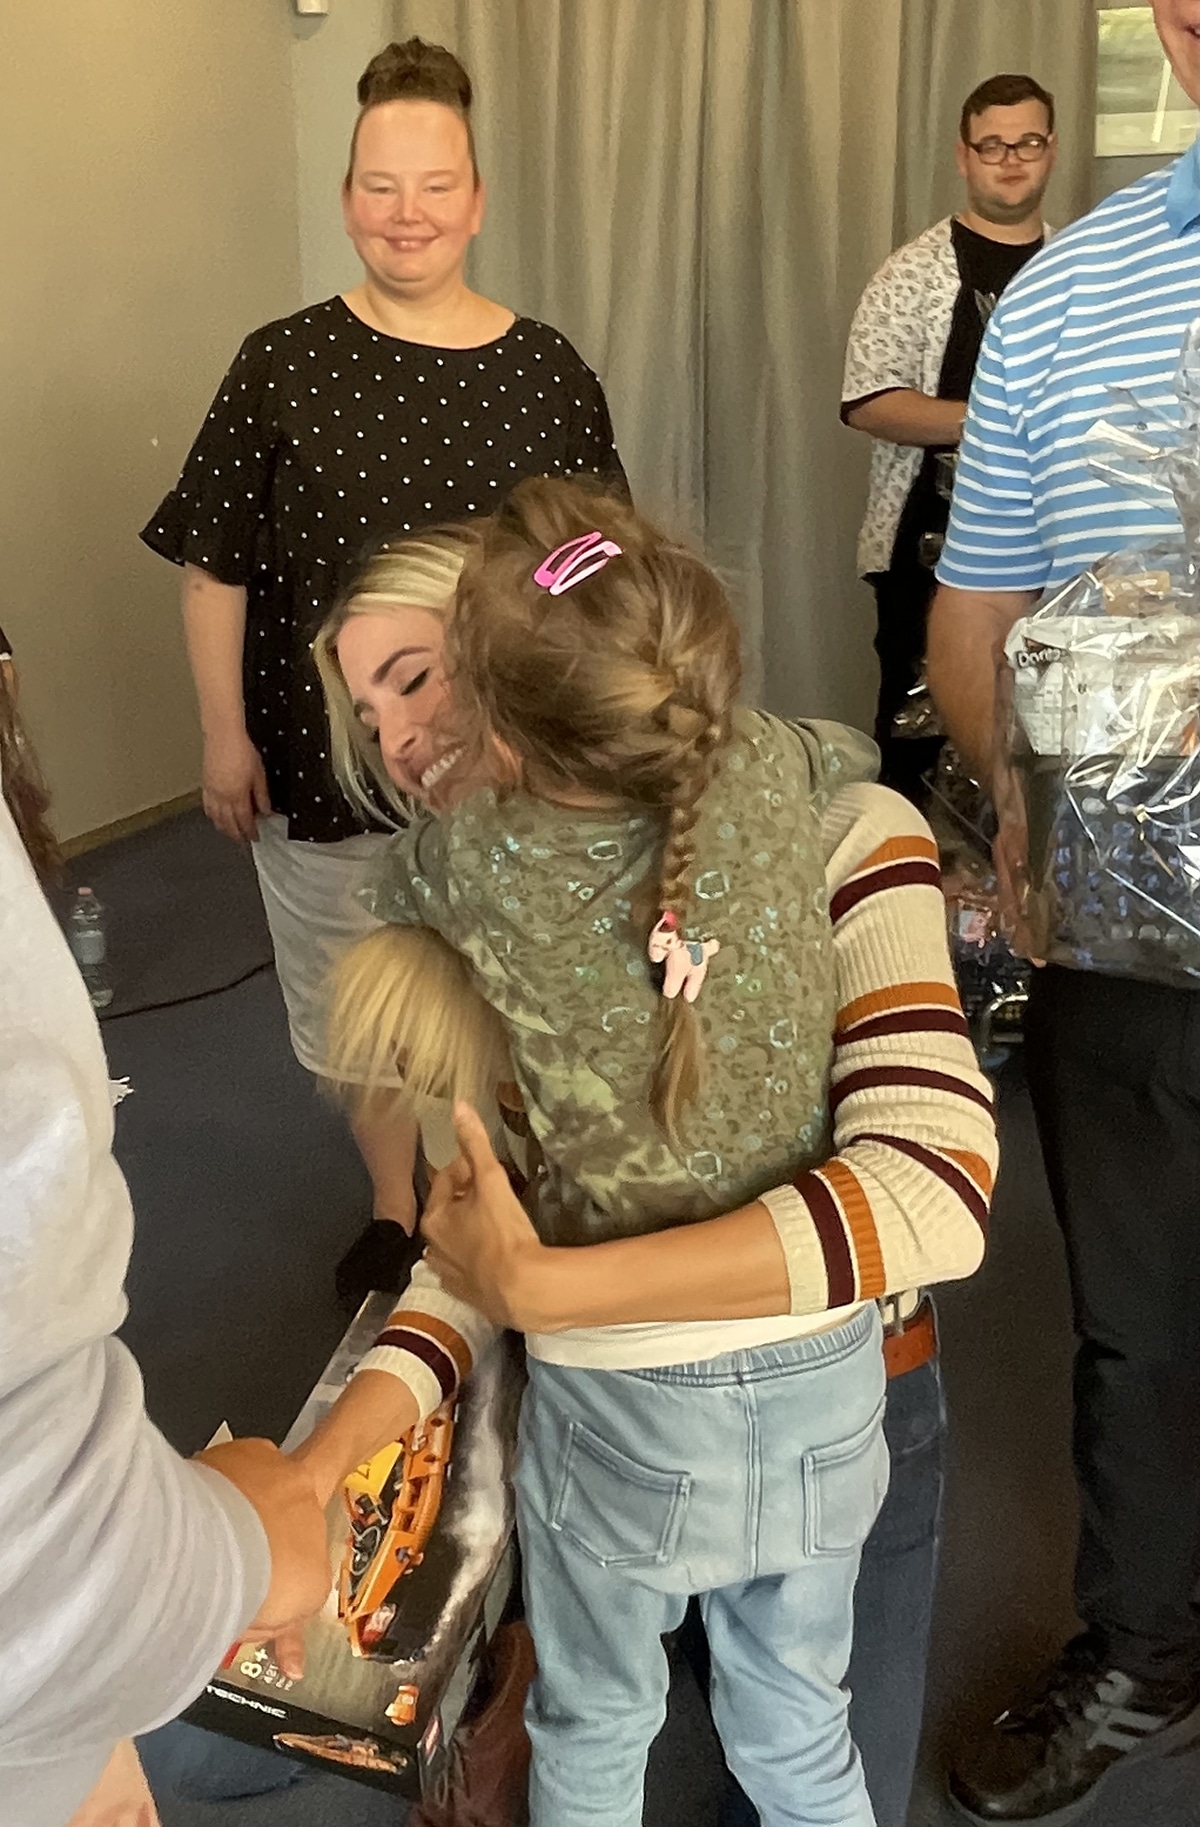 Ivanka Trump hugging a young girl.